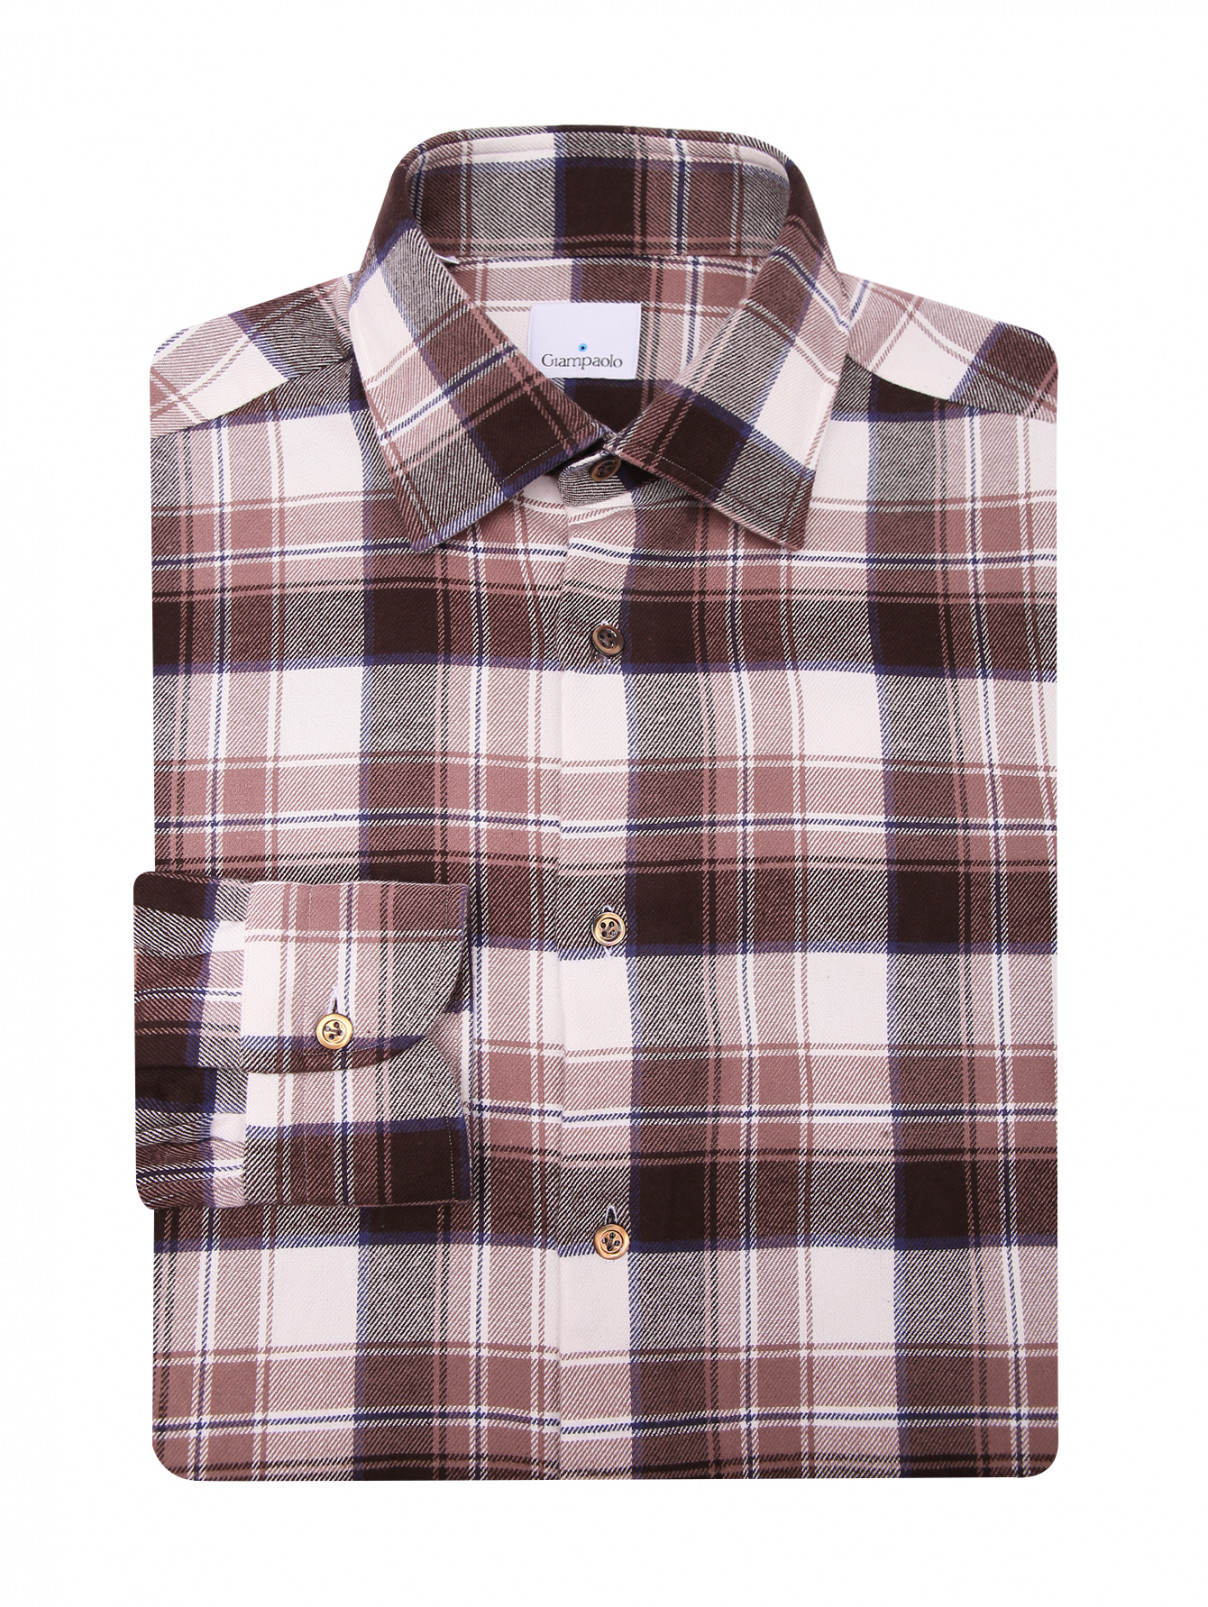 Рубашка из хлопка с узором на пуговицах Giampaolo  –  Общий вид  – Цвет:  Узор